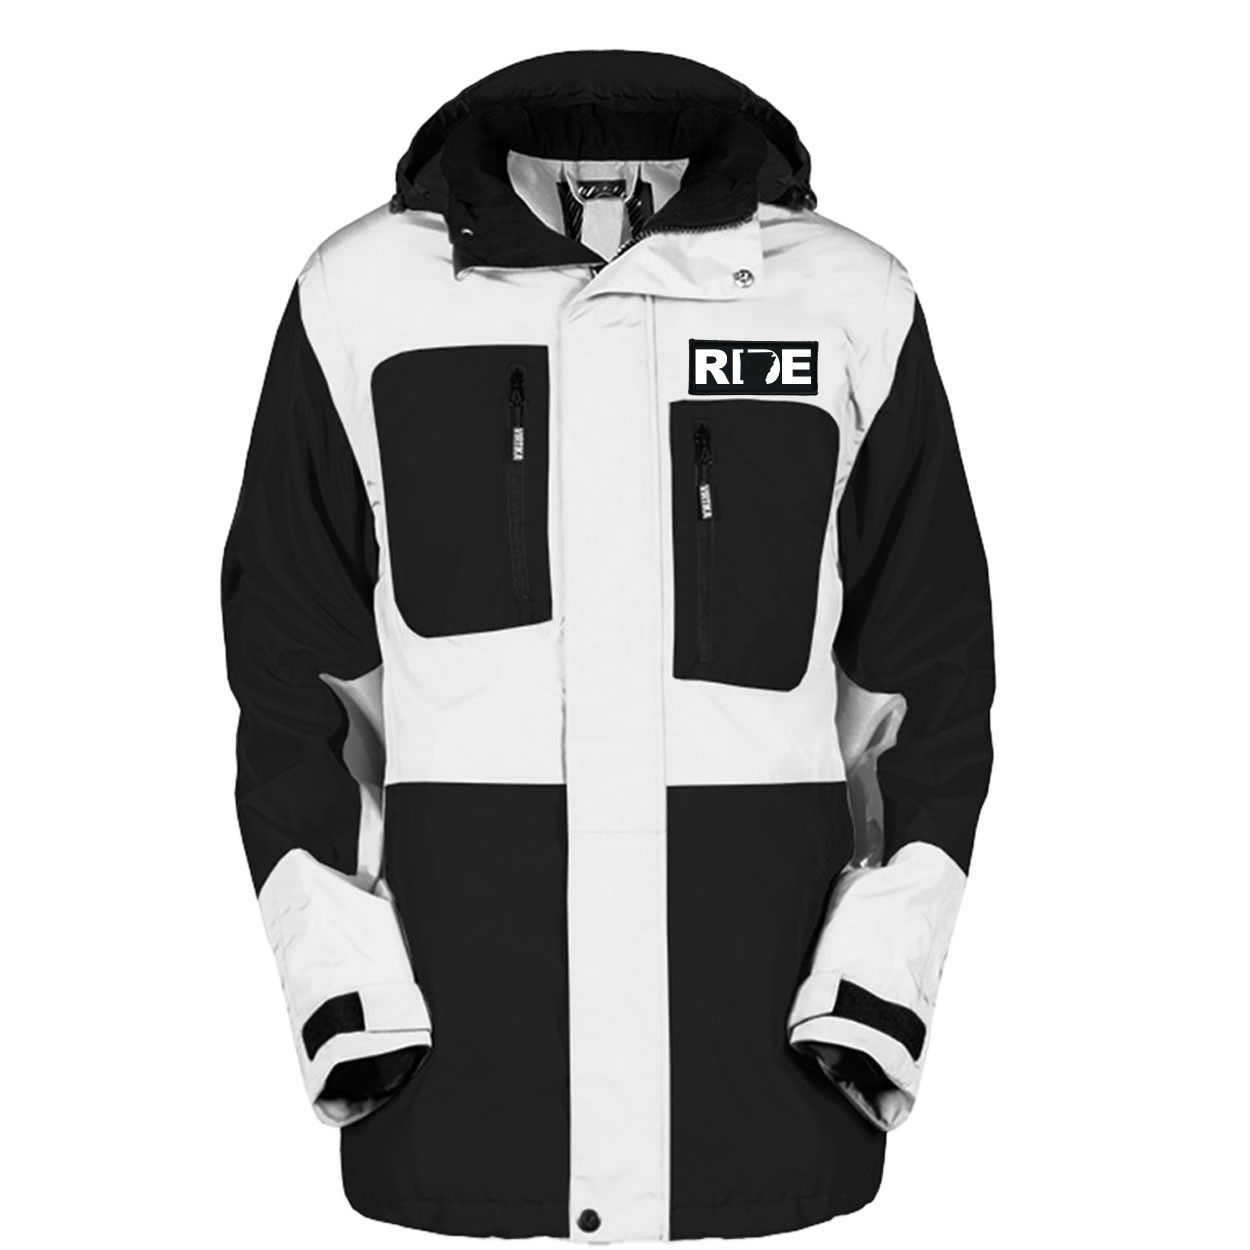 Ride Arkansas Pro Waterproof Breathable Winter Virtika Jacket Black/White (White Logo)